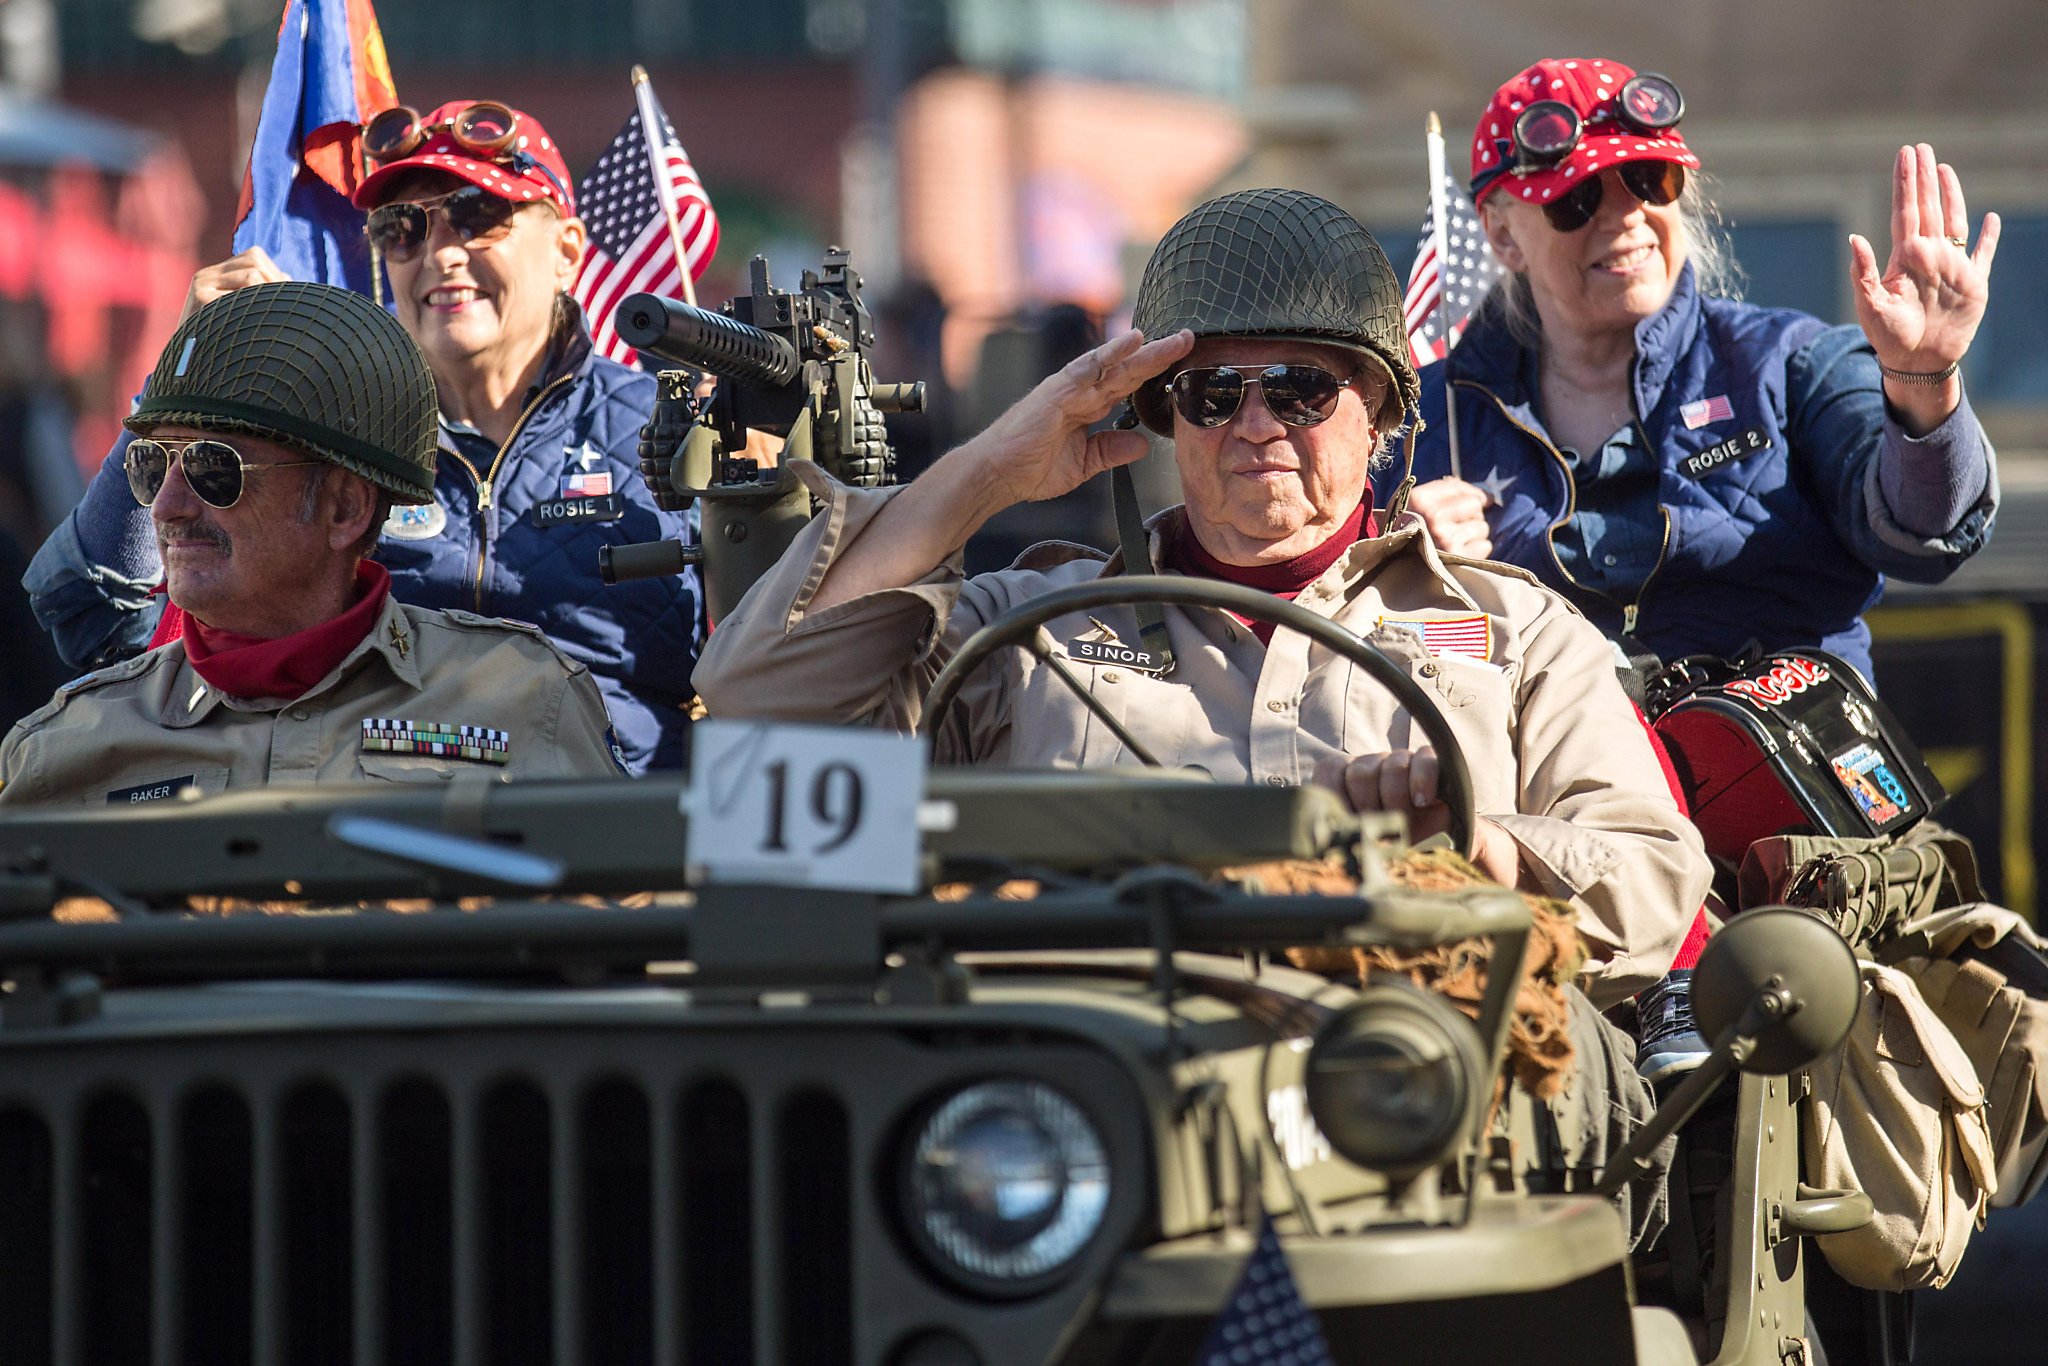 San Francisco Veterans Day Parade a ‘celebration of service